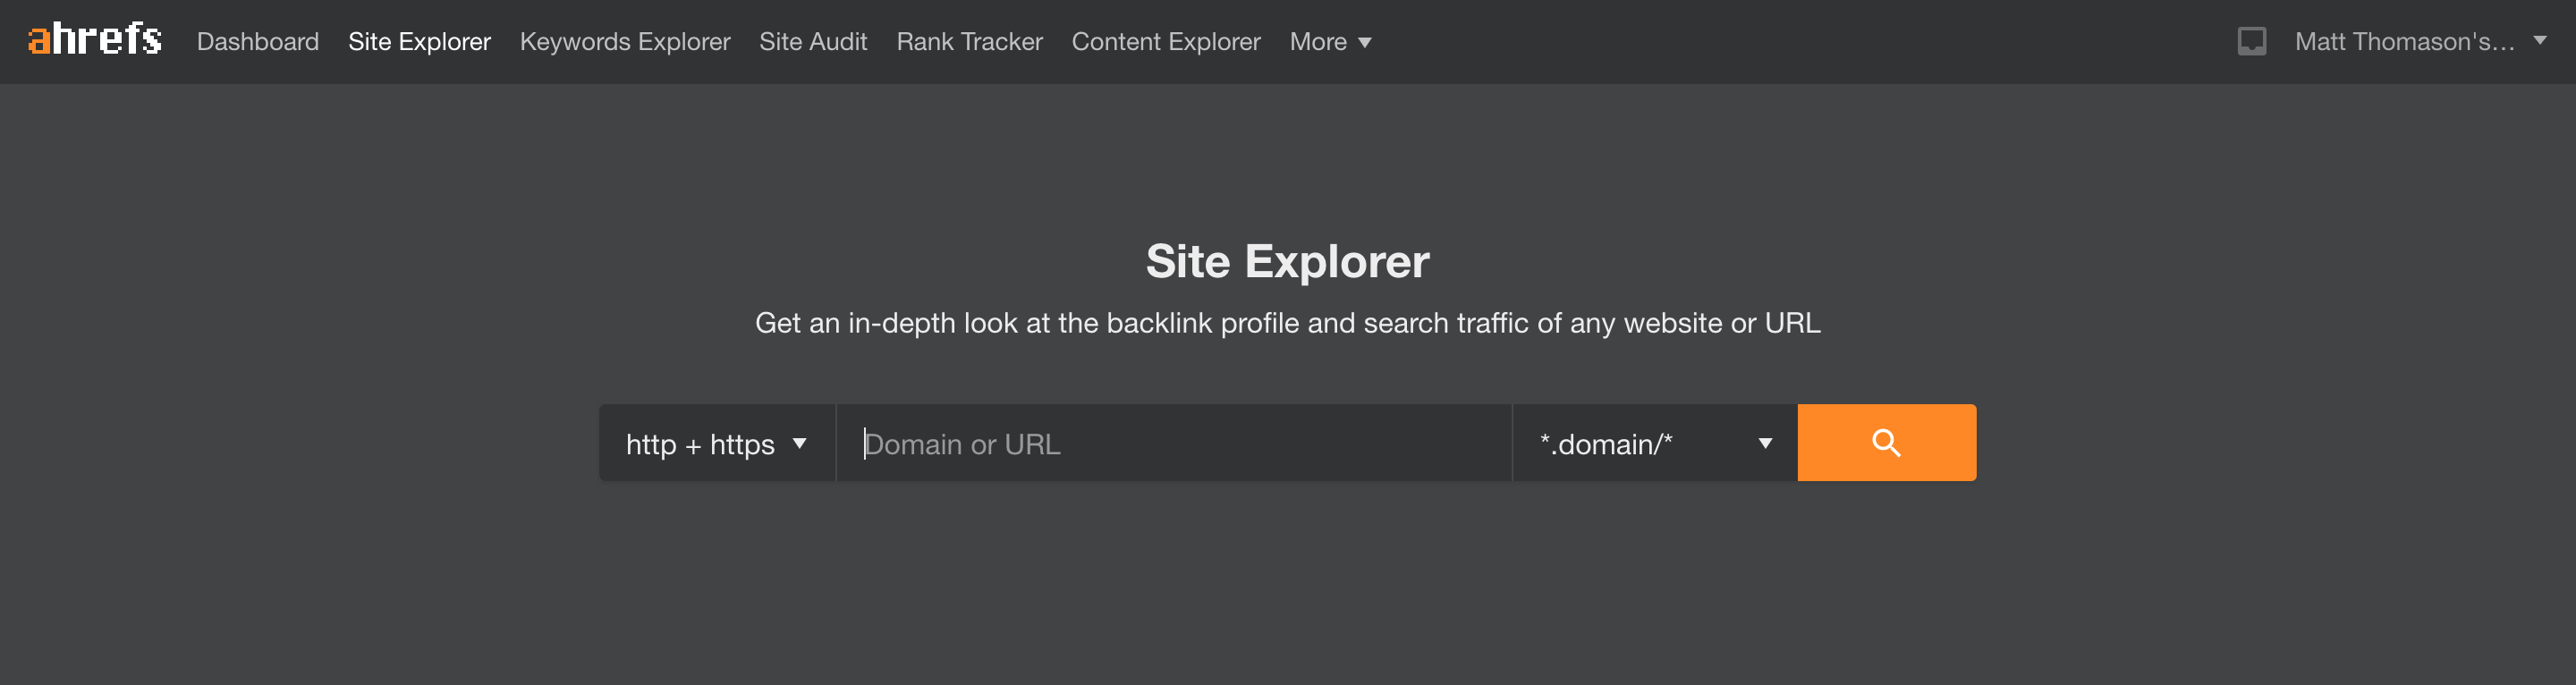 site explorer in ahrefs webmaster tools